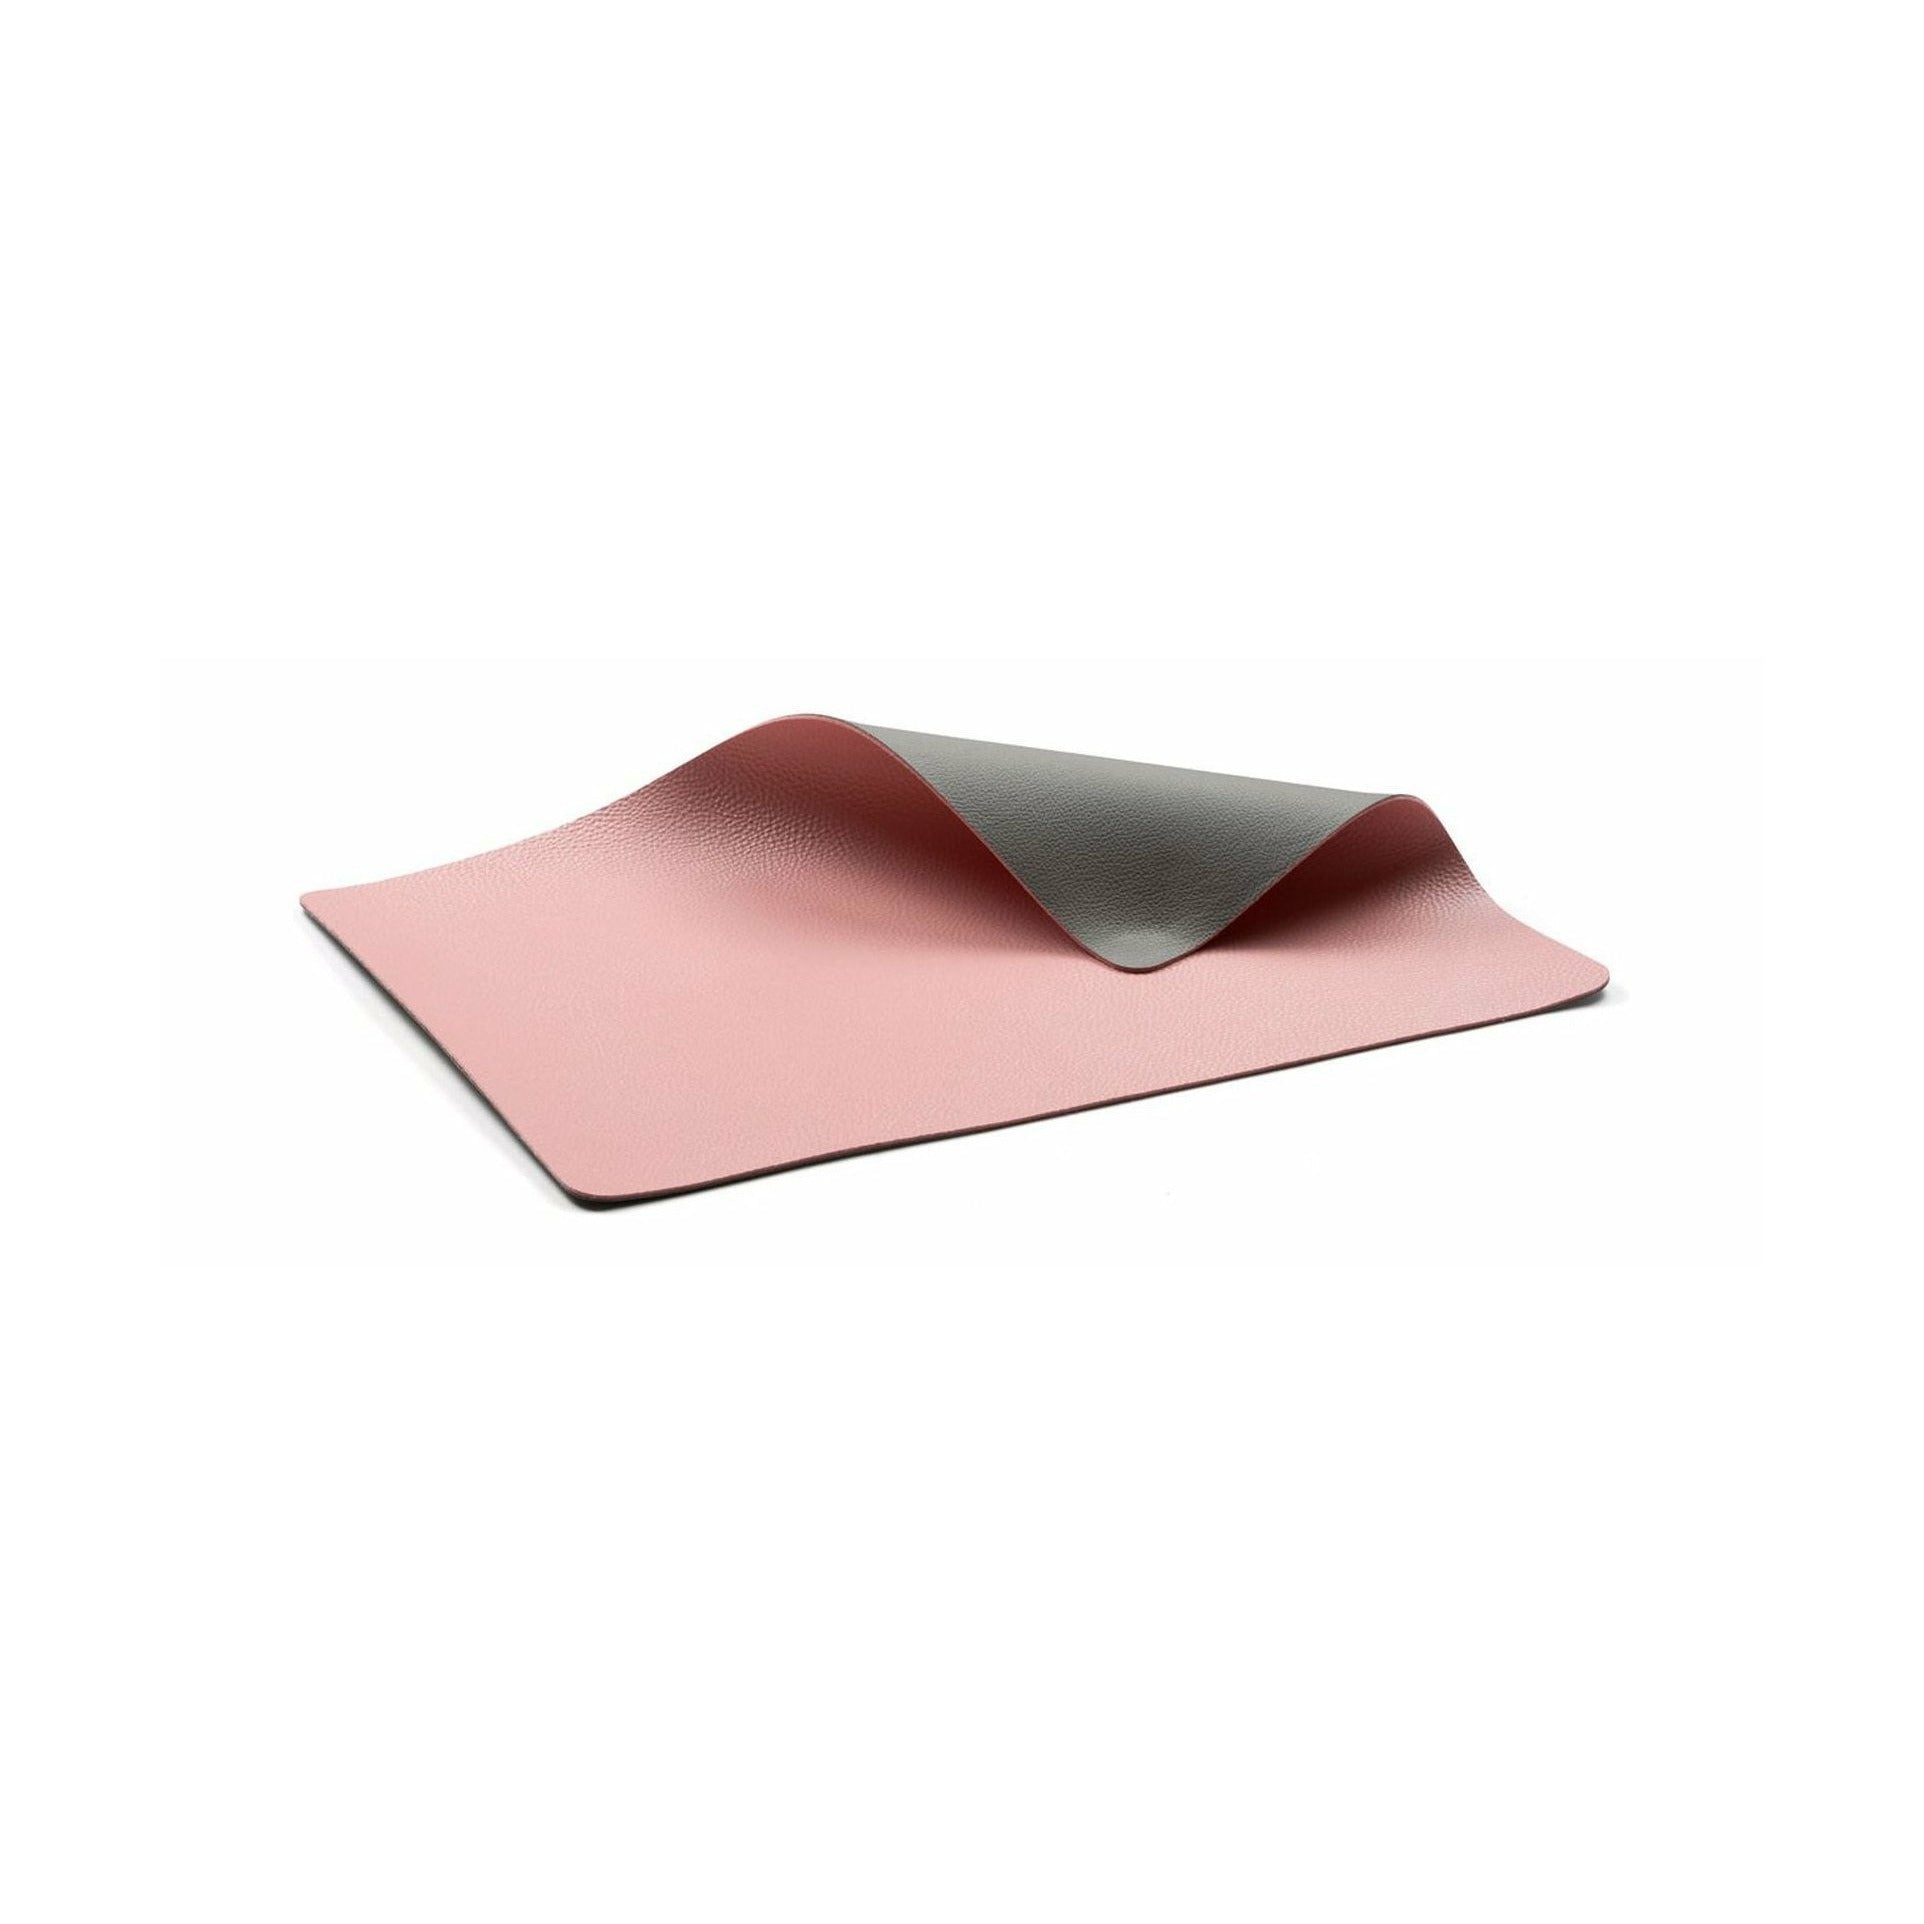 Bitz Placloth -sarja 46x33 cm, harmaa/vaaleanpunainen